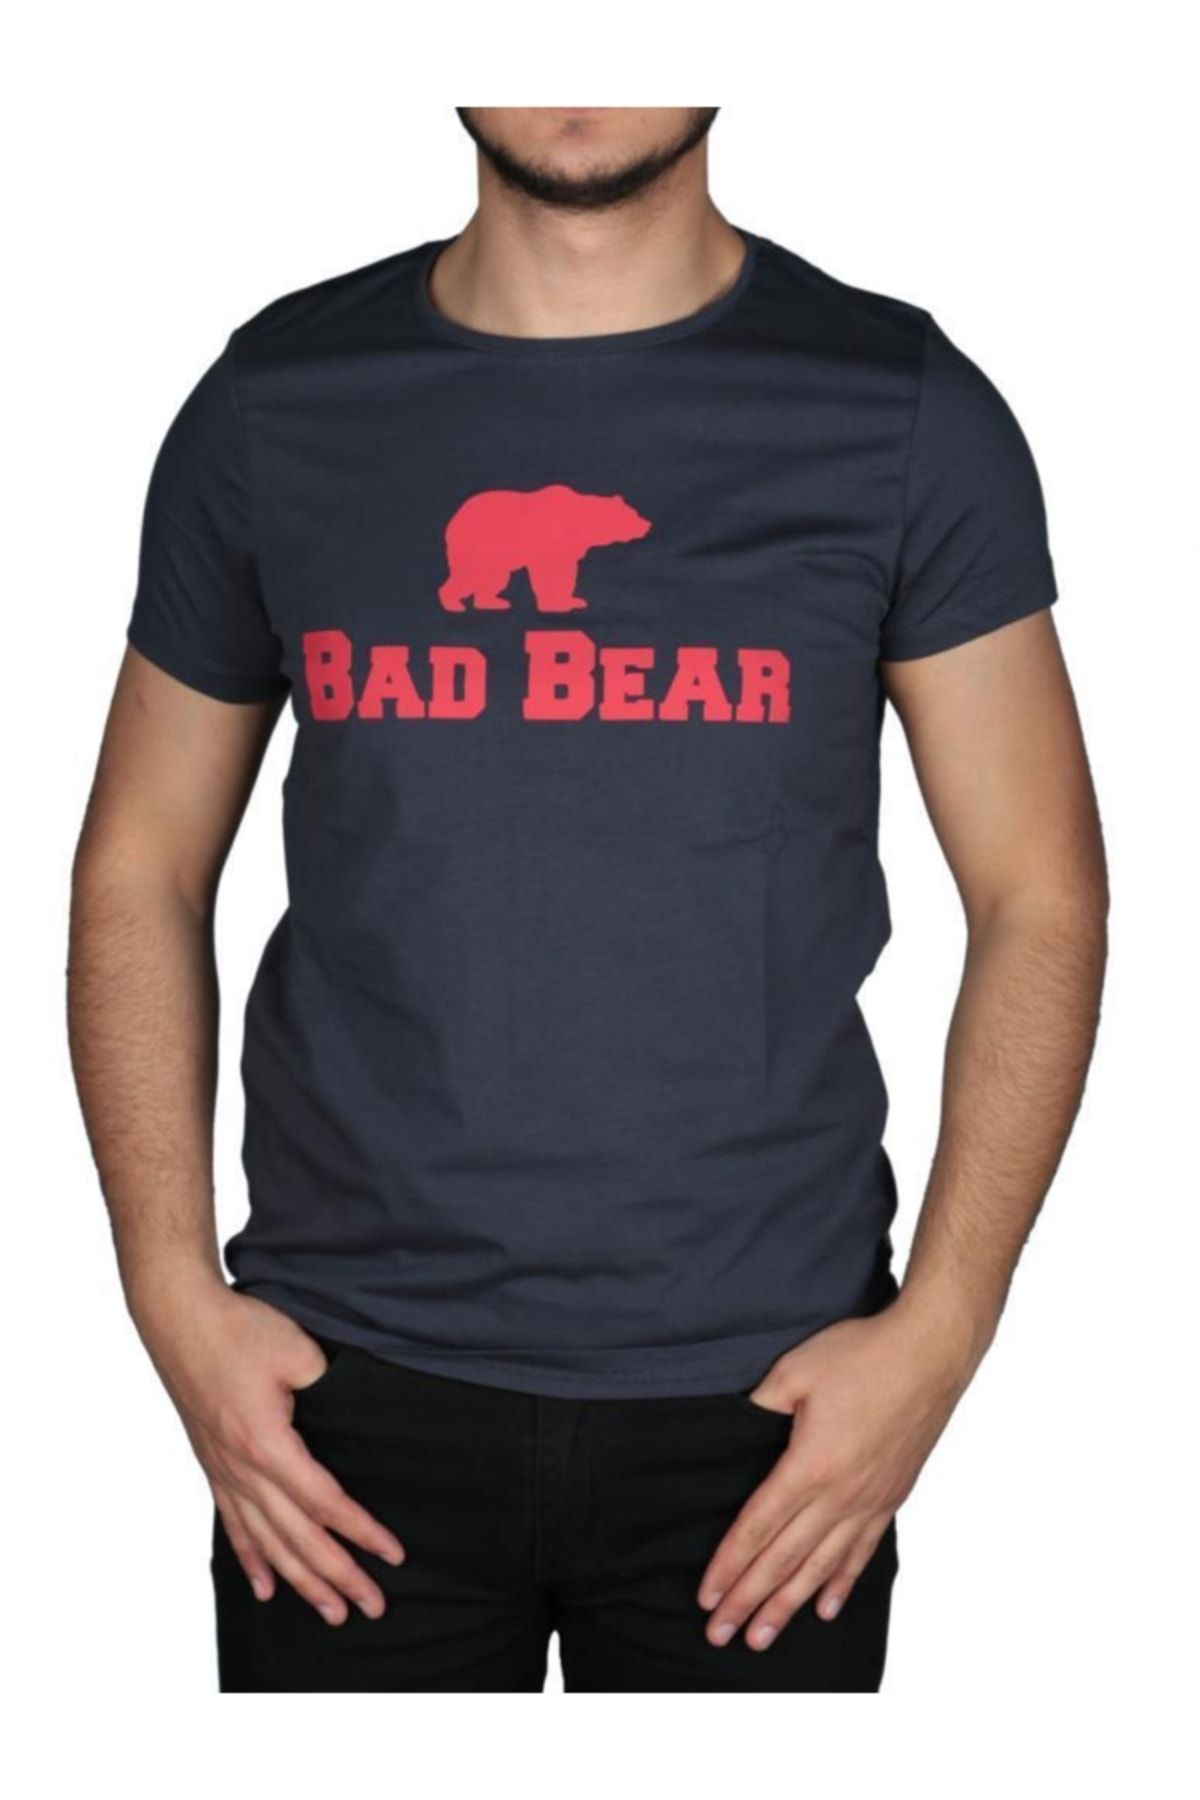 Bad Bear Erkek Baskılı Tshirt 19.01.07.002